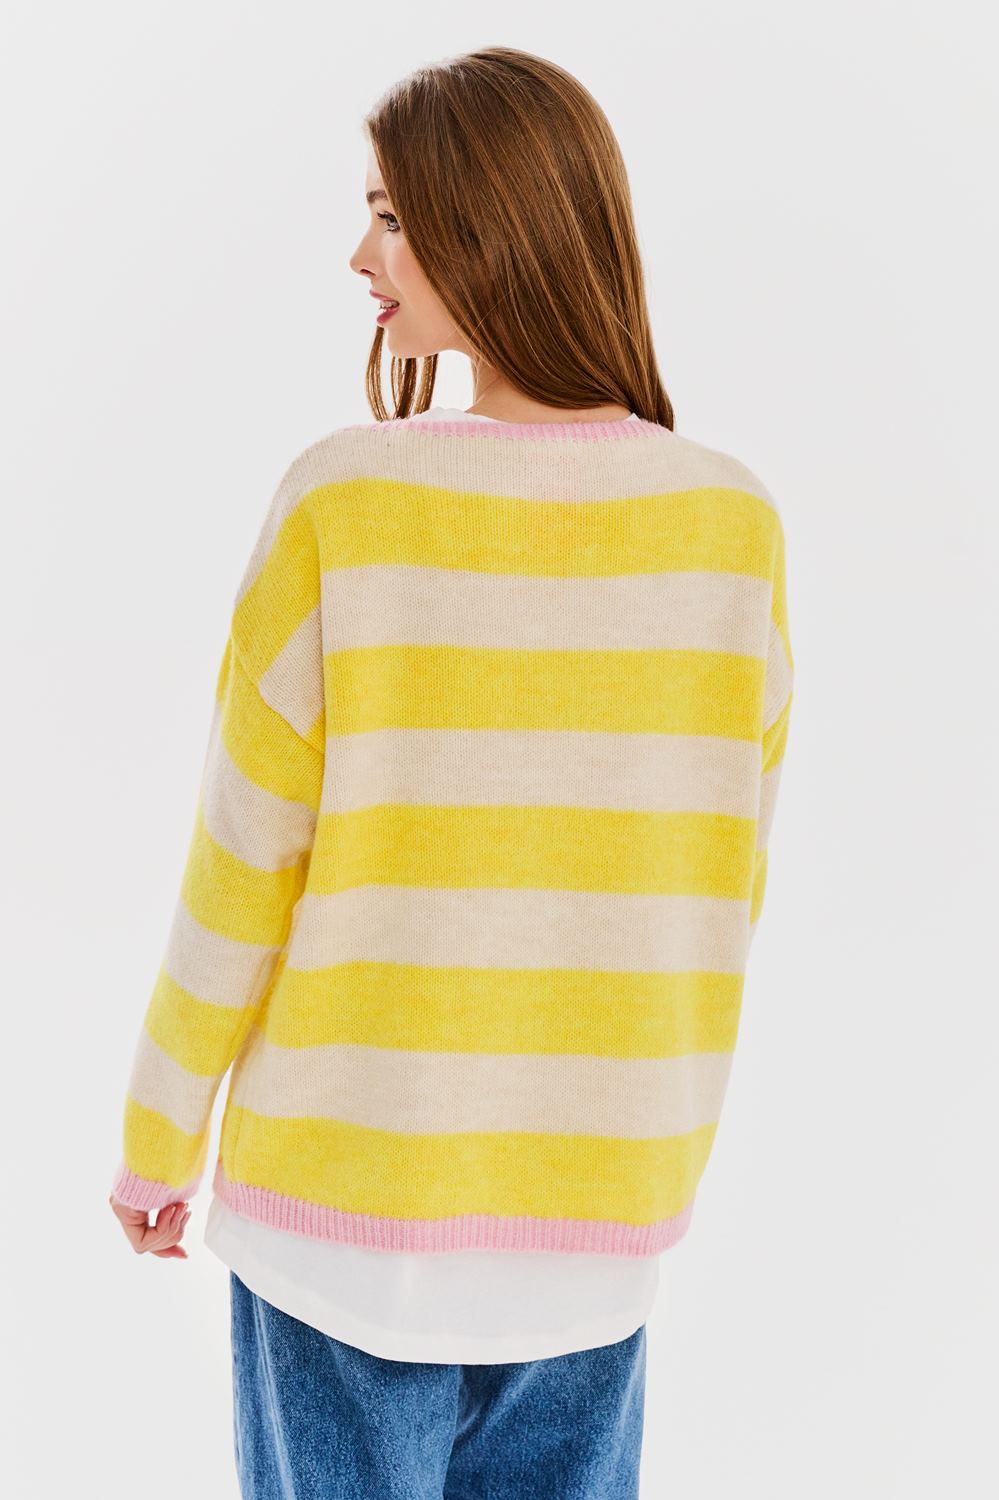 Moonshine sweater